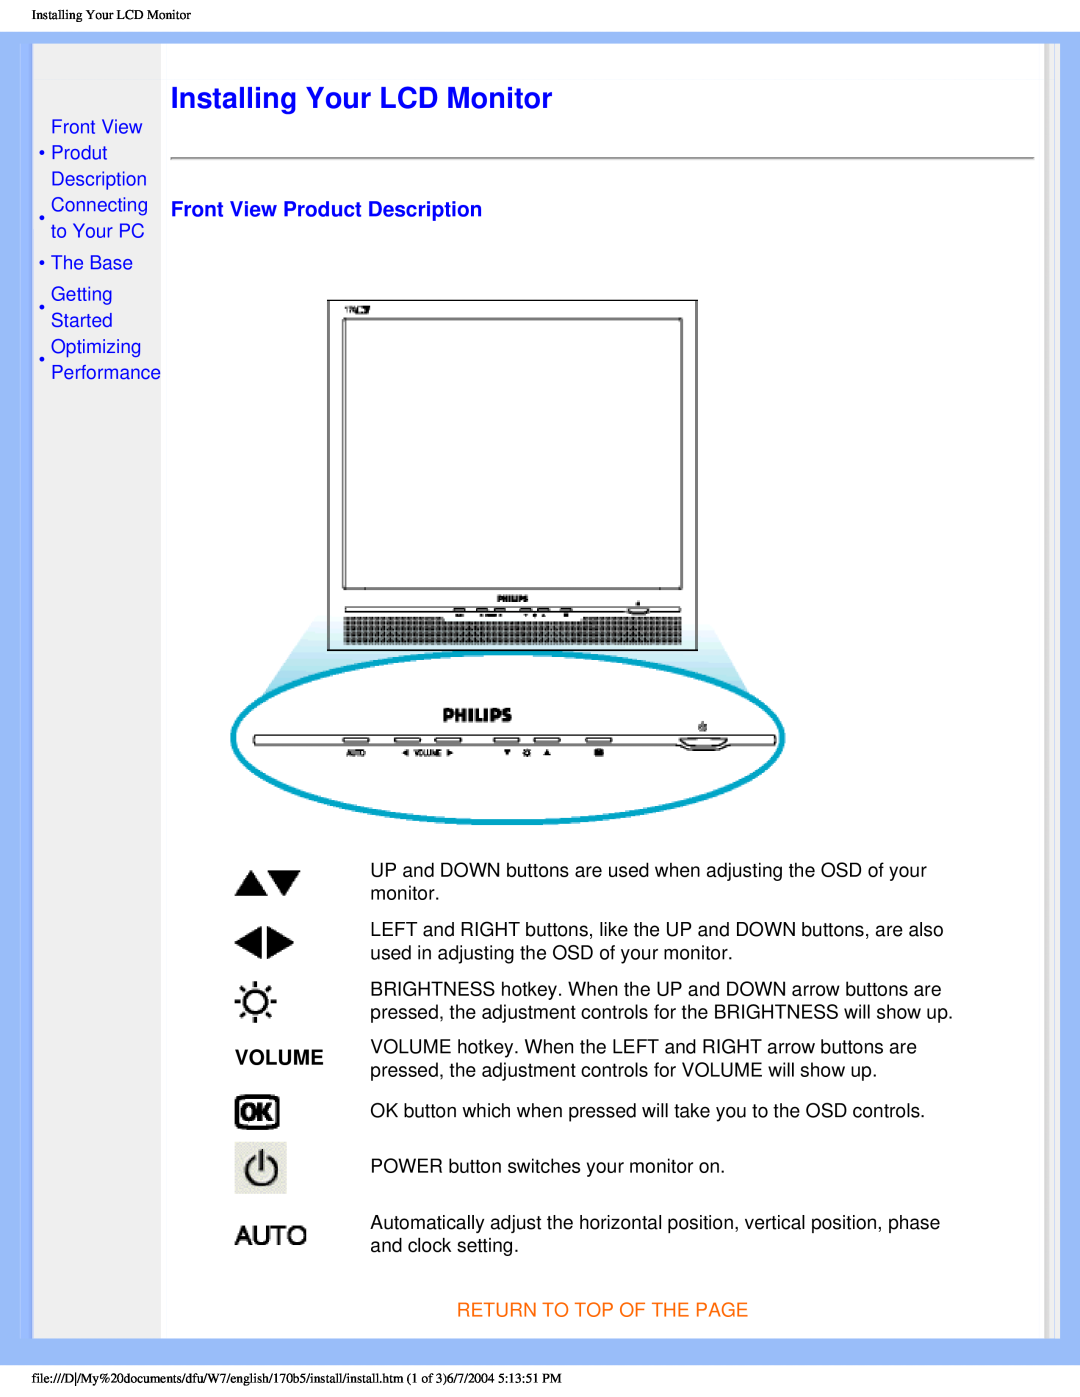 Philips 170B5 Installing Your LCD Monitor, Front View Product Description, Volume, Front View Produt Description 